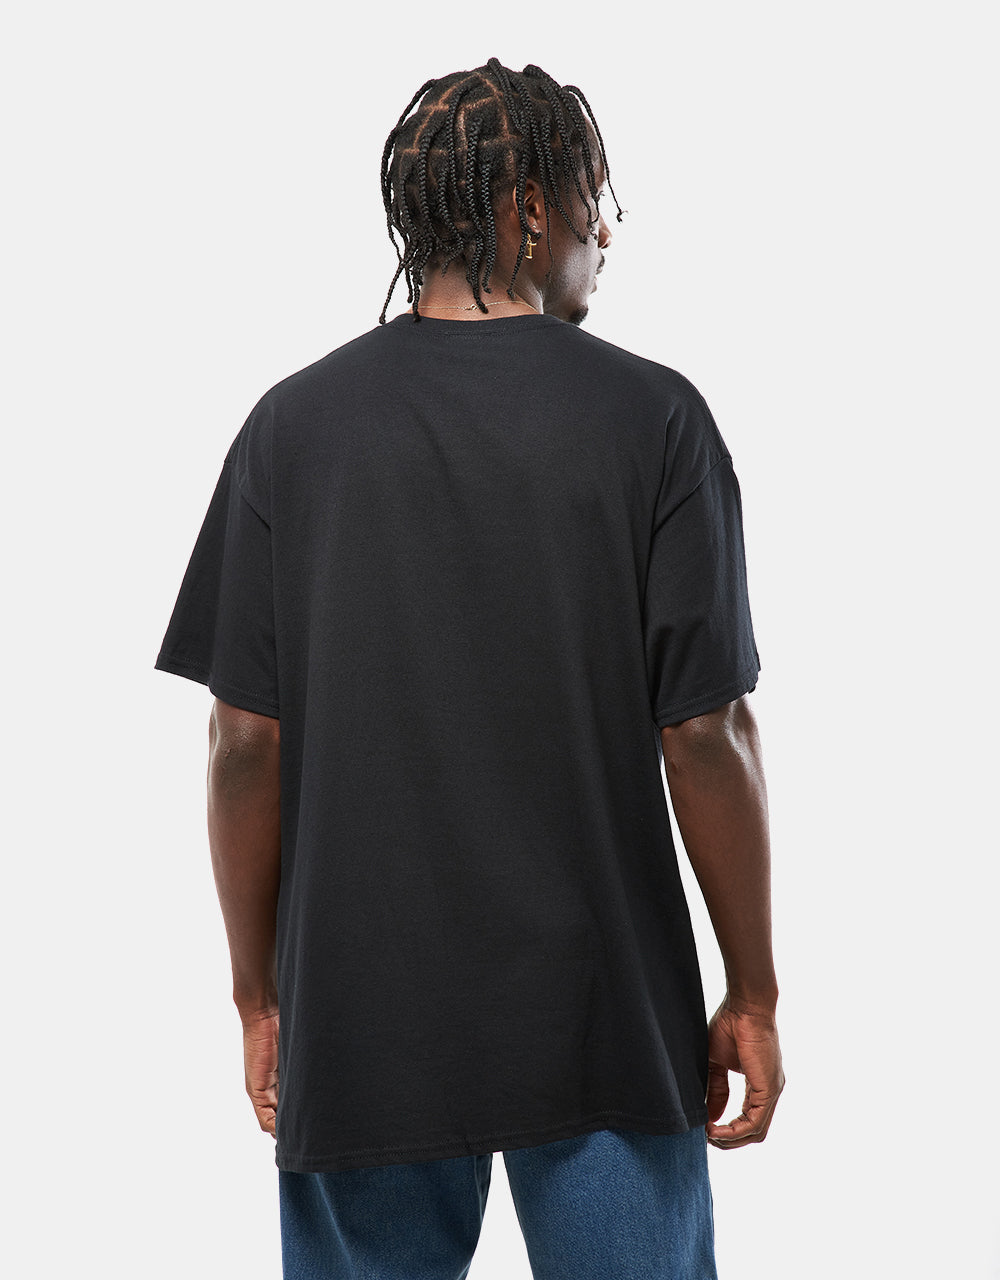 Thrasher Skategoat T-Shirt - Black